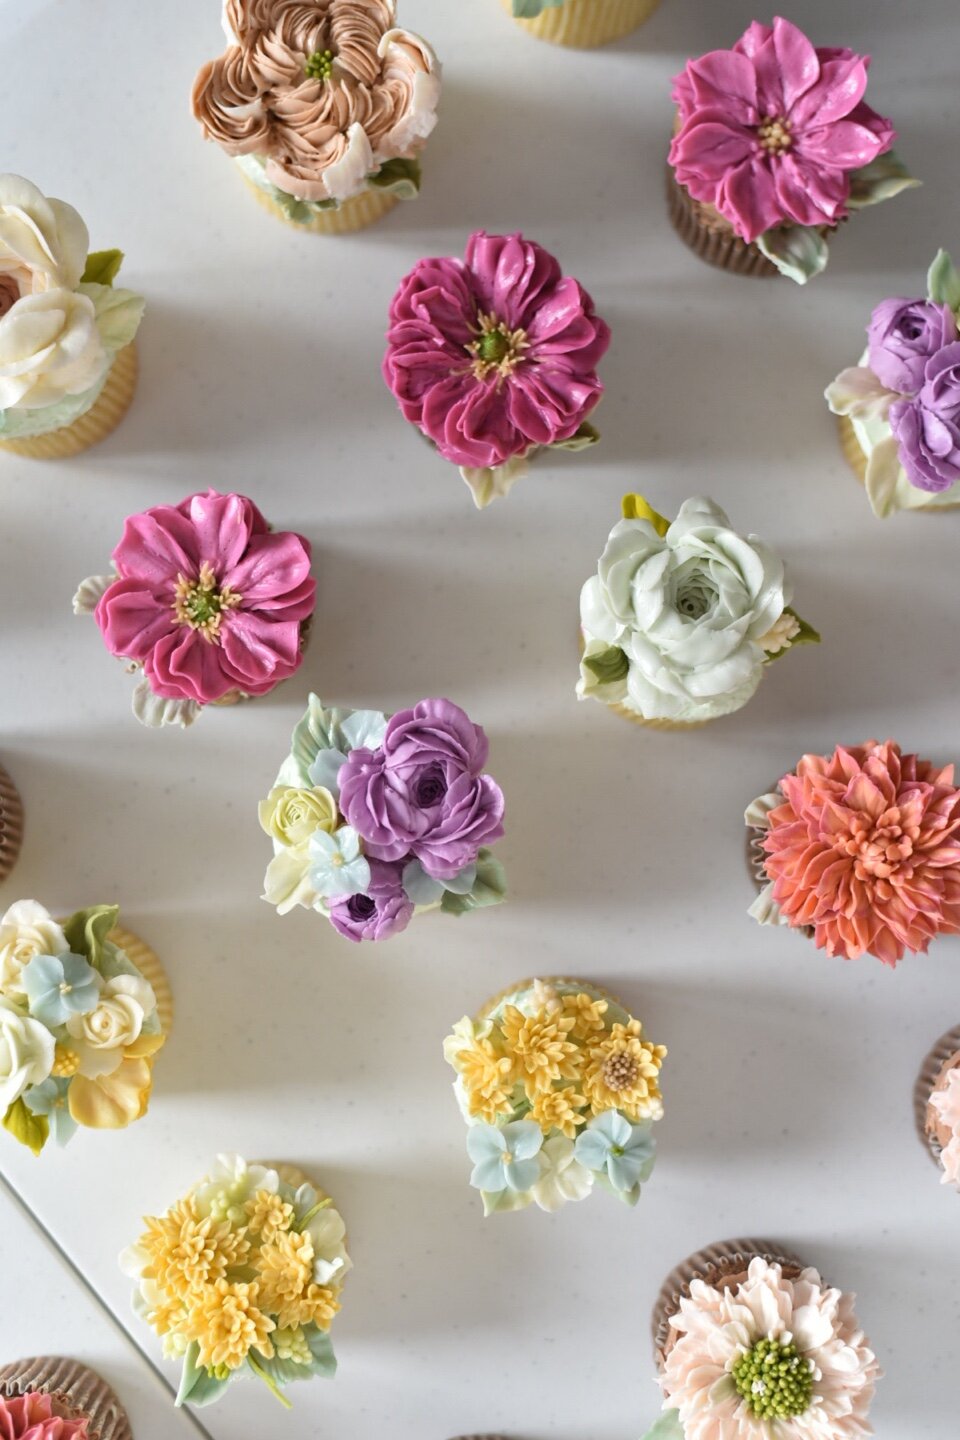 cupcakes 5.jpg